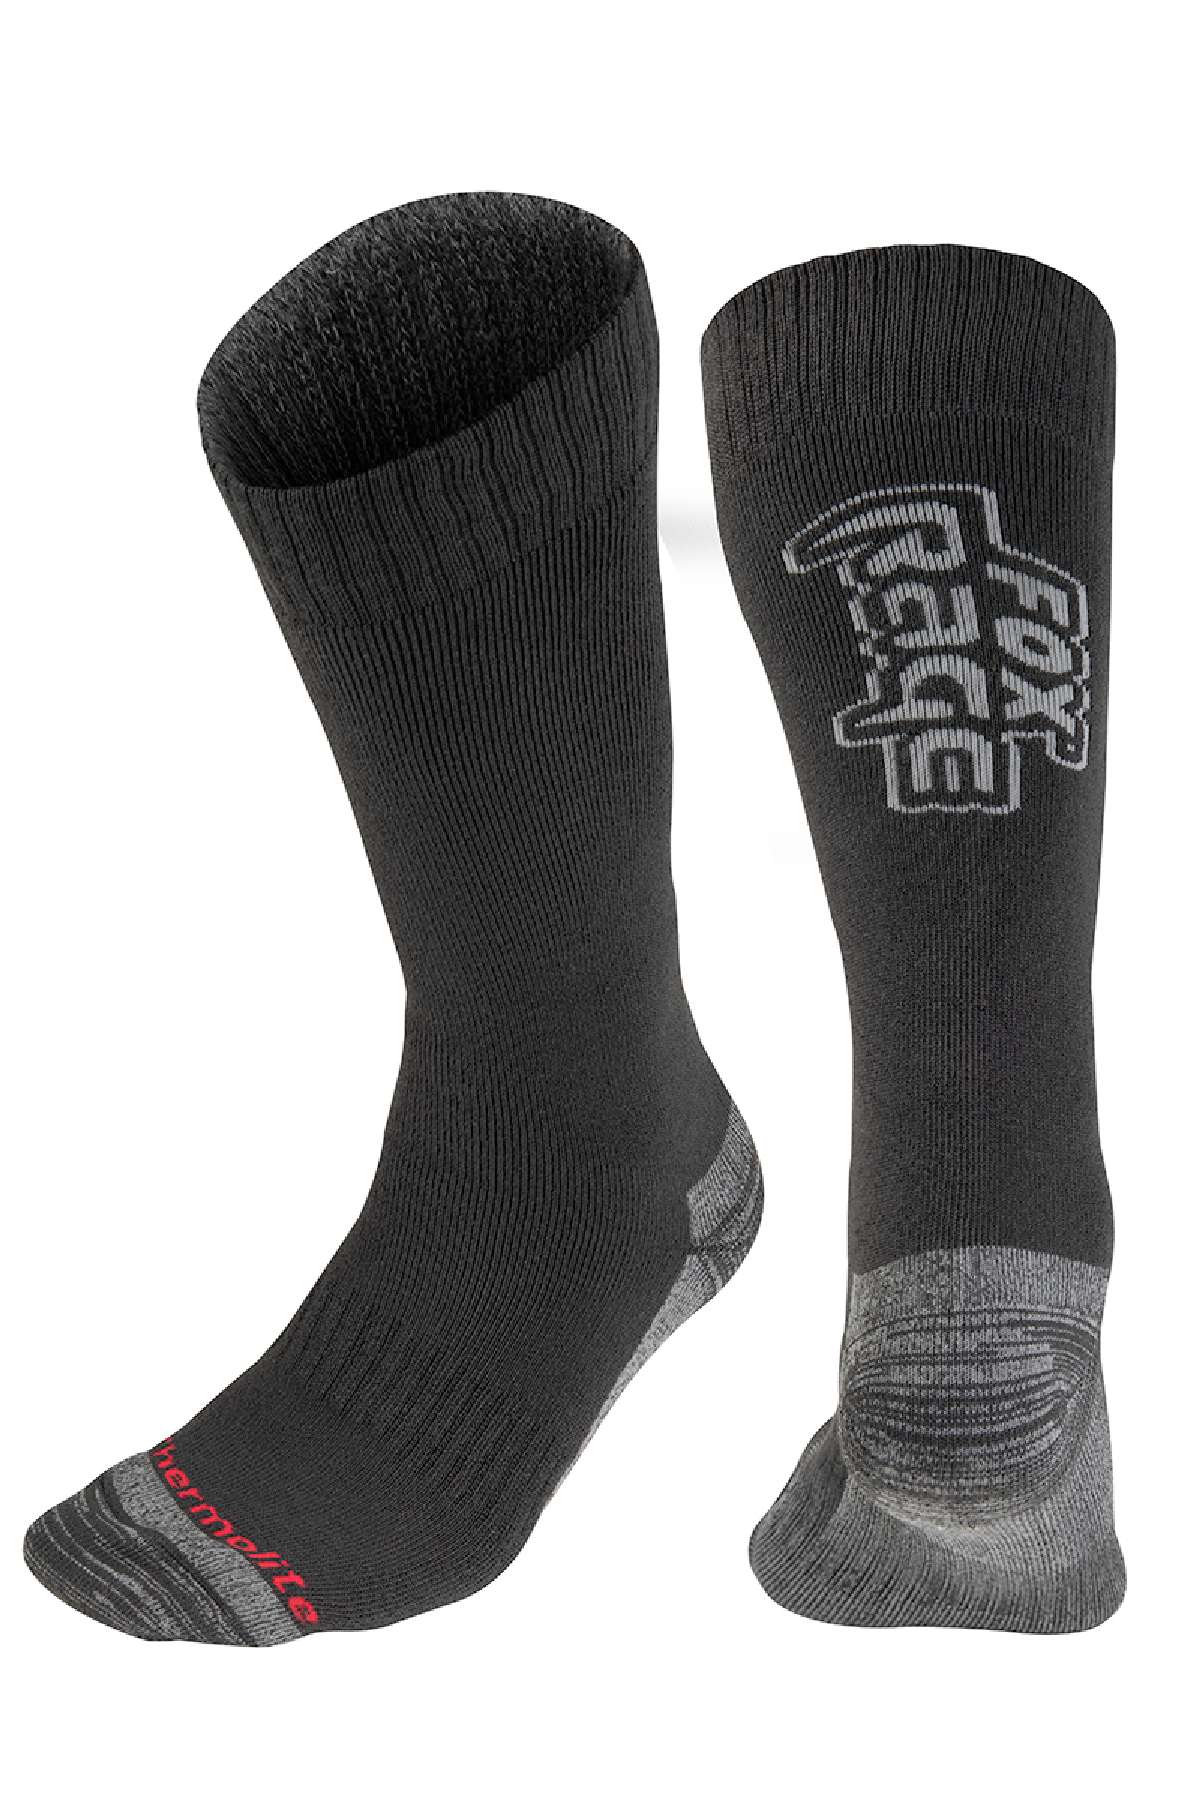 Fox Rage Thermolite Socks Size 40-43